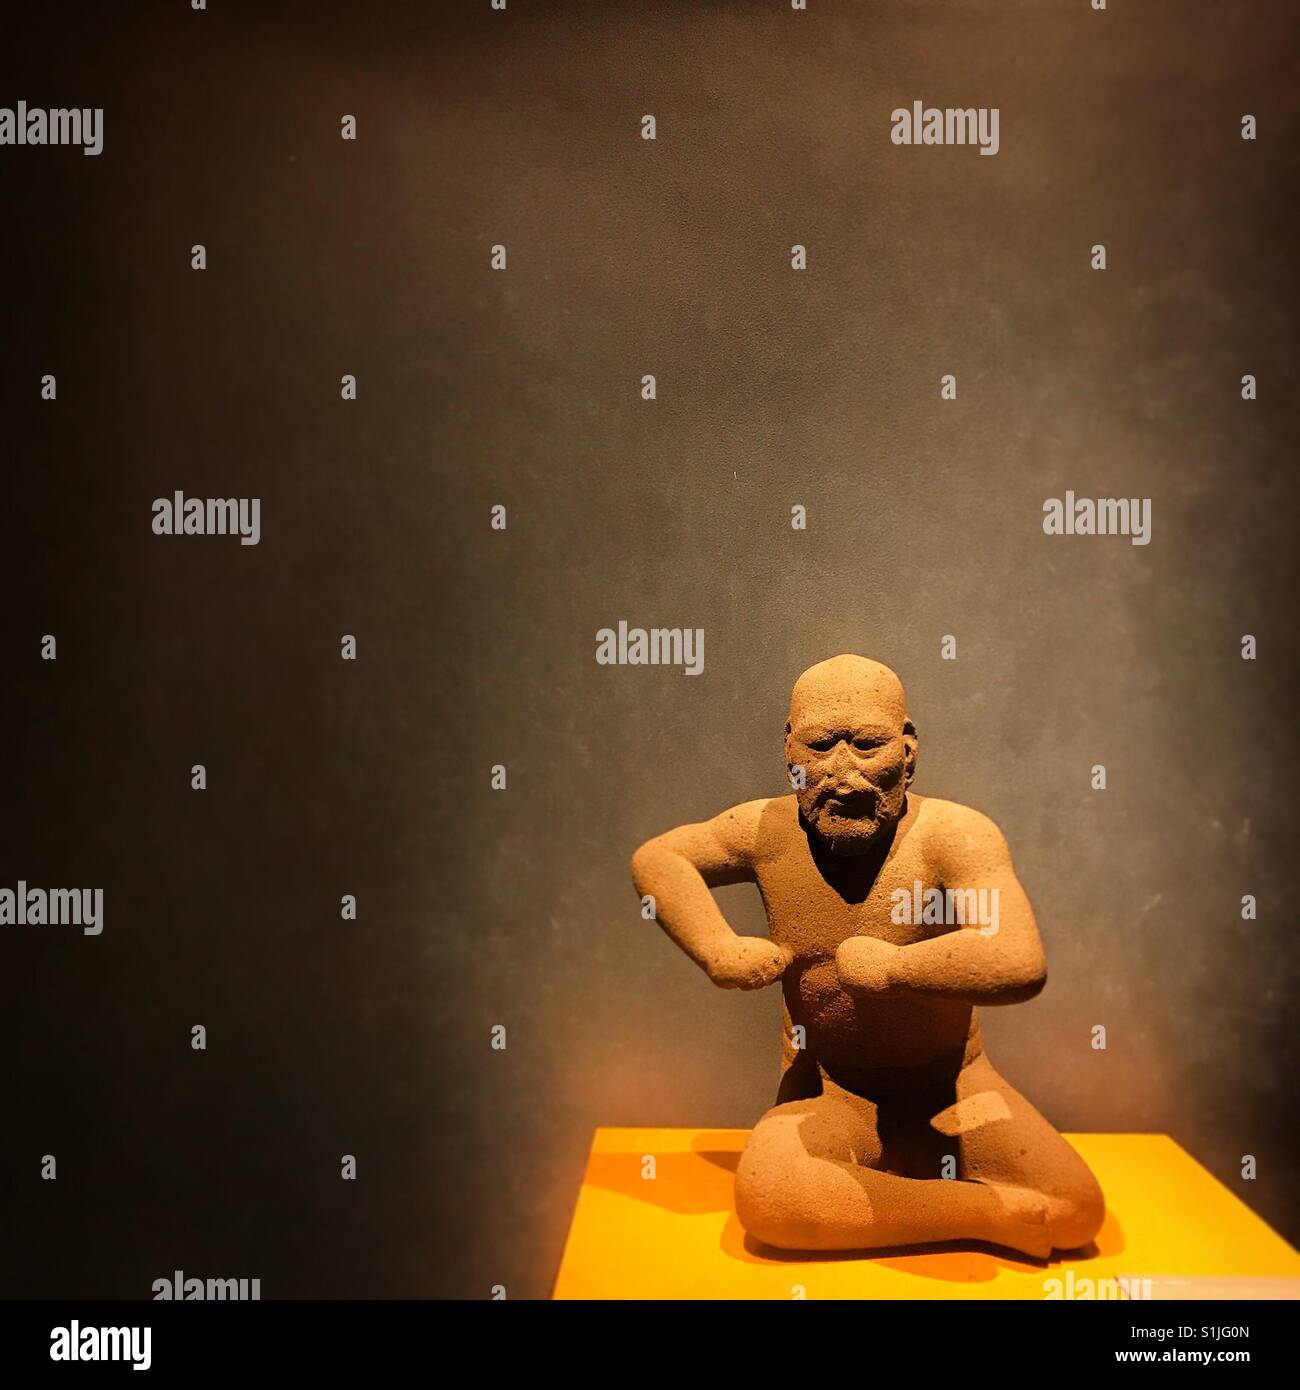 A sculpture of a man from the Olmec culture is displayed in the Museo Nacional de Antropologia e Historia en Mexico City, Mexico Stock Photo